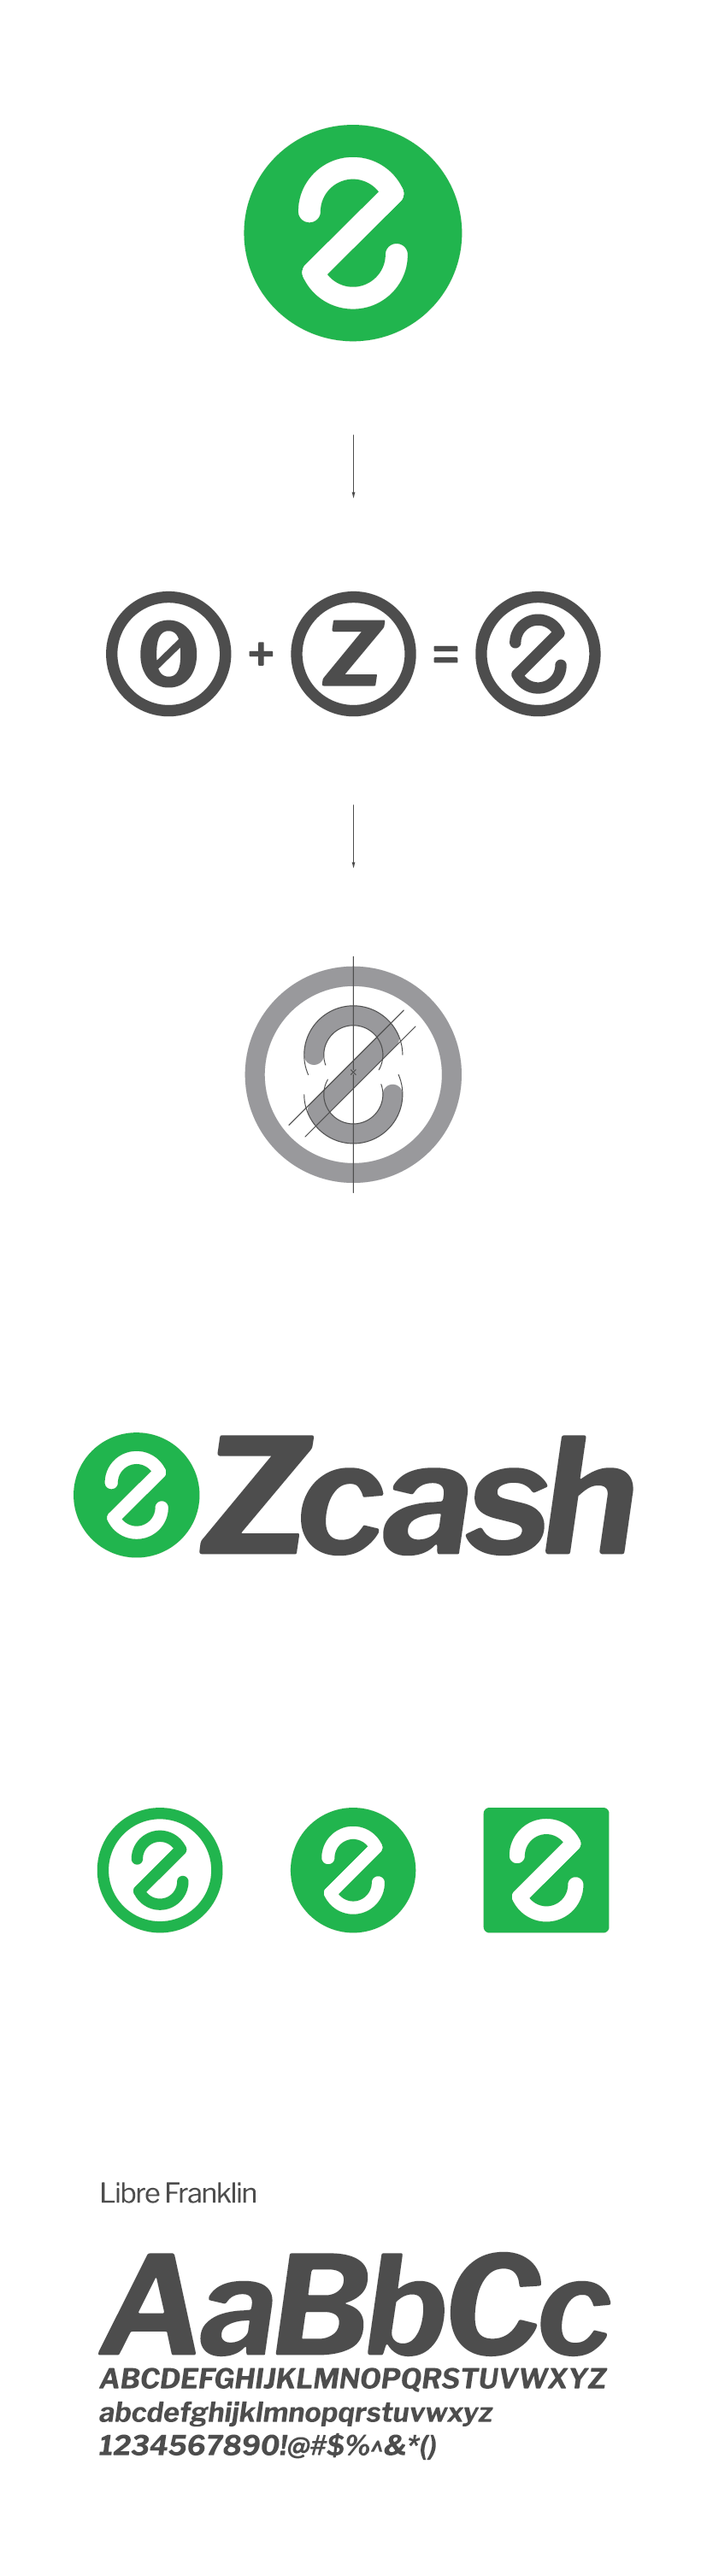 Zcash Logo - Zcash altcoin cryptocurrency bitcoin logo visual identity id